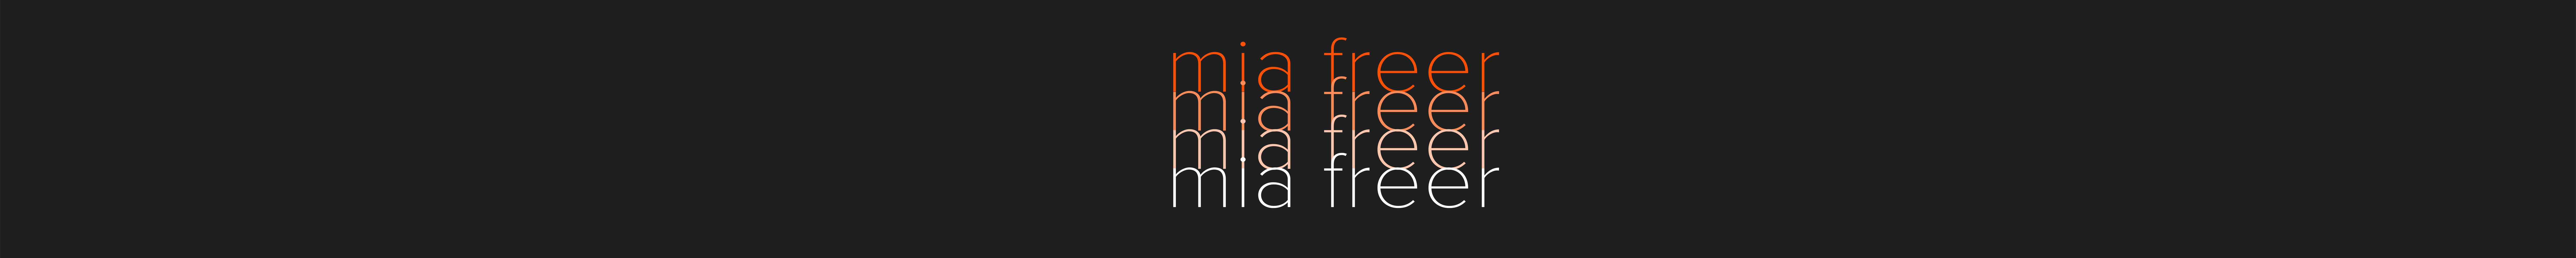 Mia Freer's profile banner